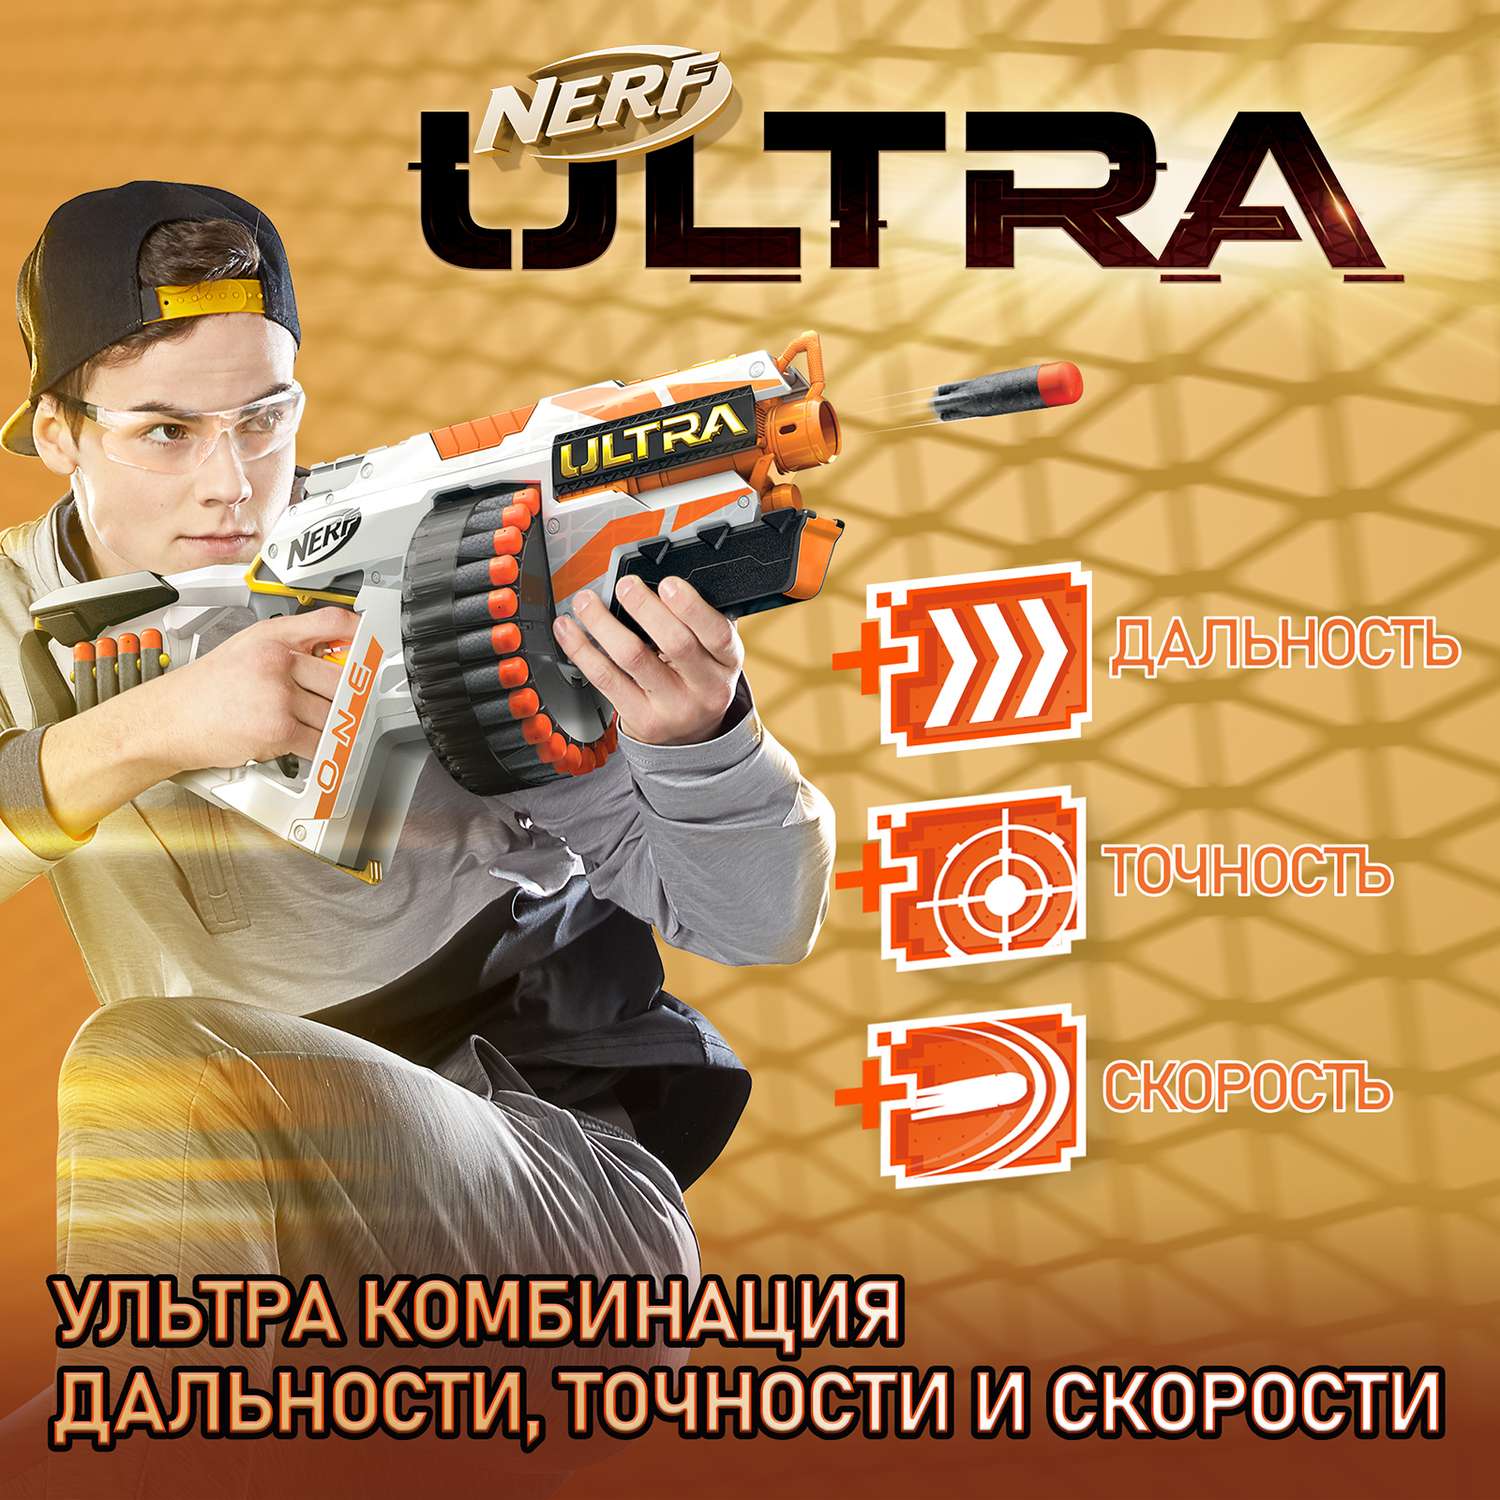 Набор игровой Nerf Ультра One E65953R0 - фото 4